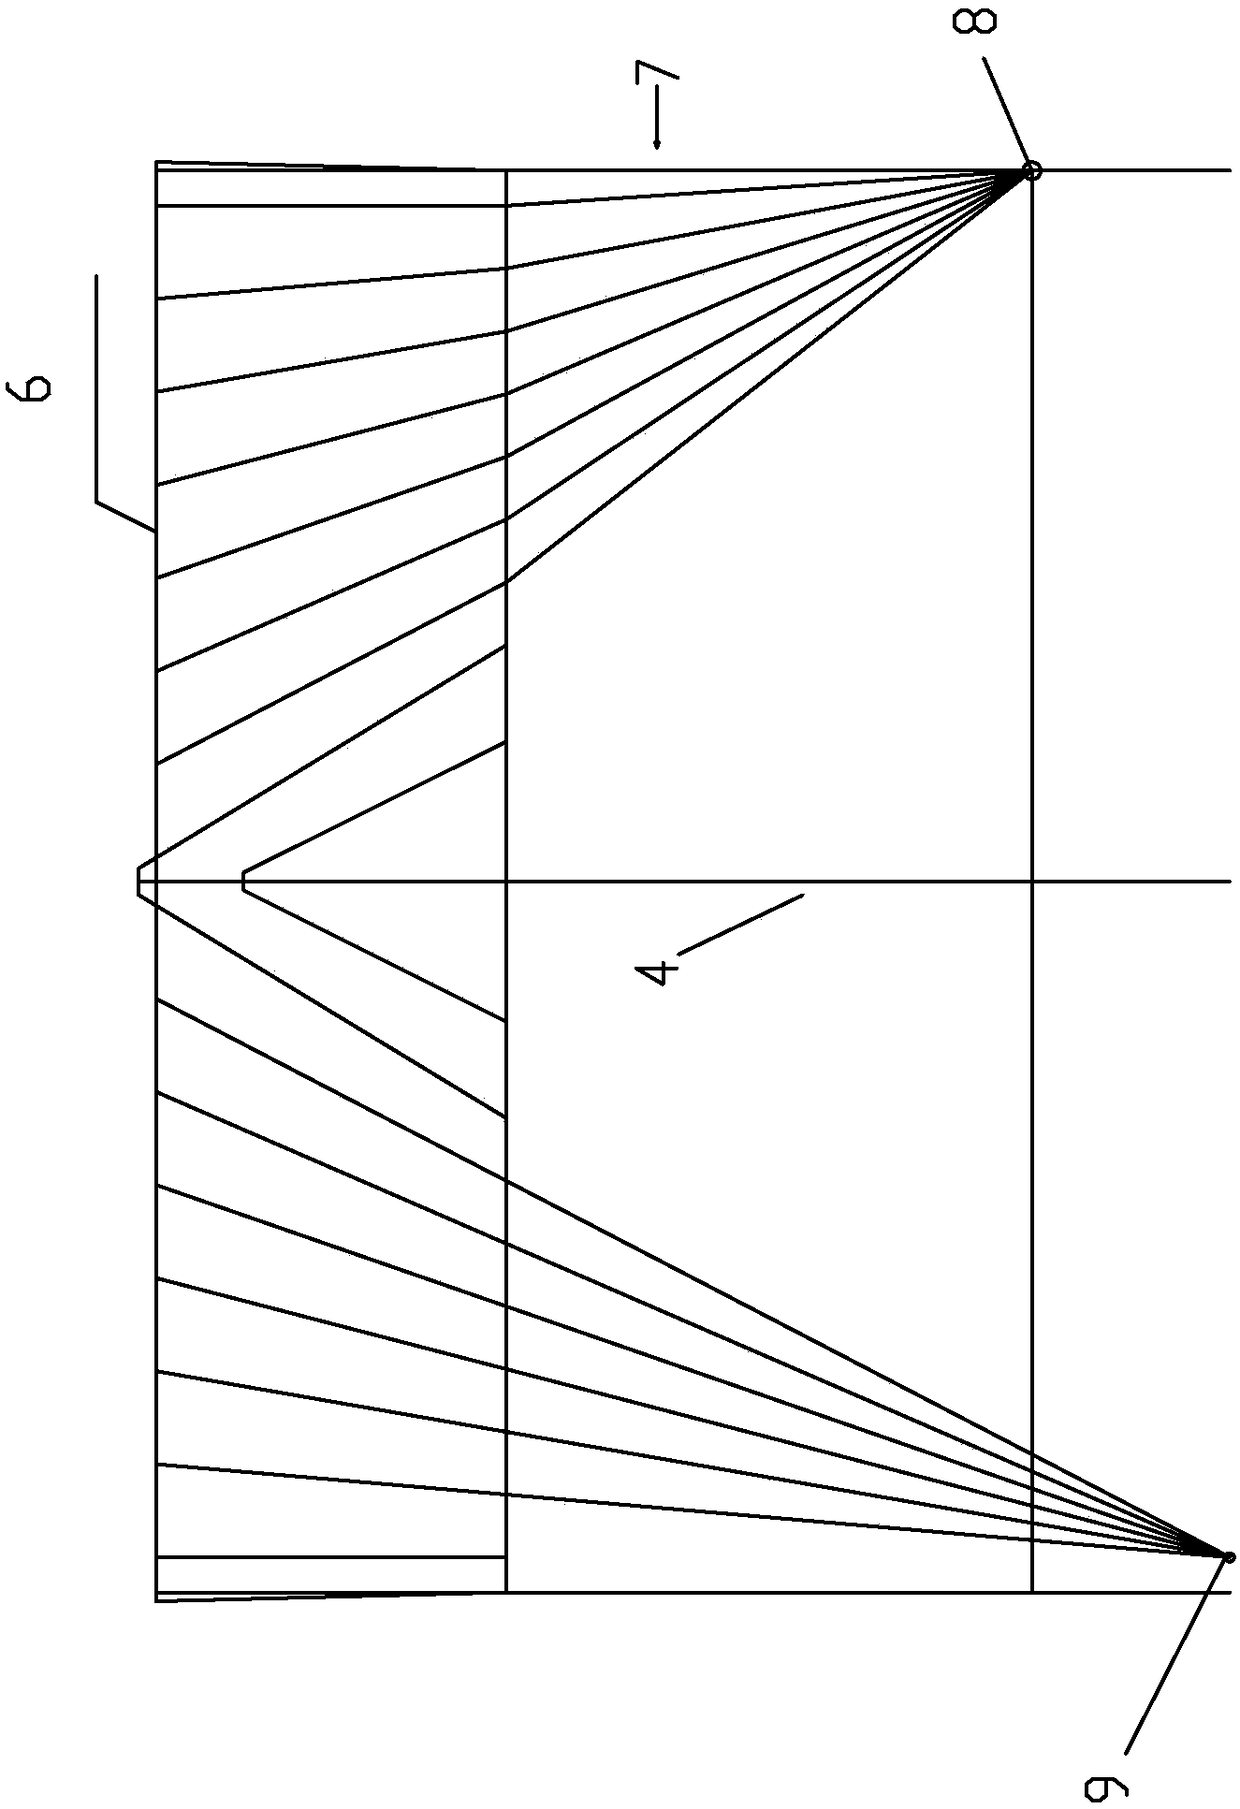 Blasting construction method adopting equal-distance fan-shaped hole distributing method for tunnel slotting and enlarging area